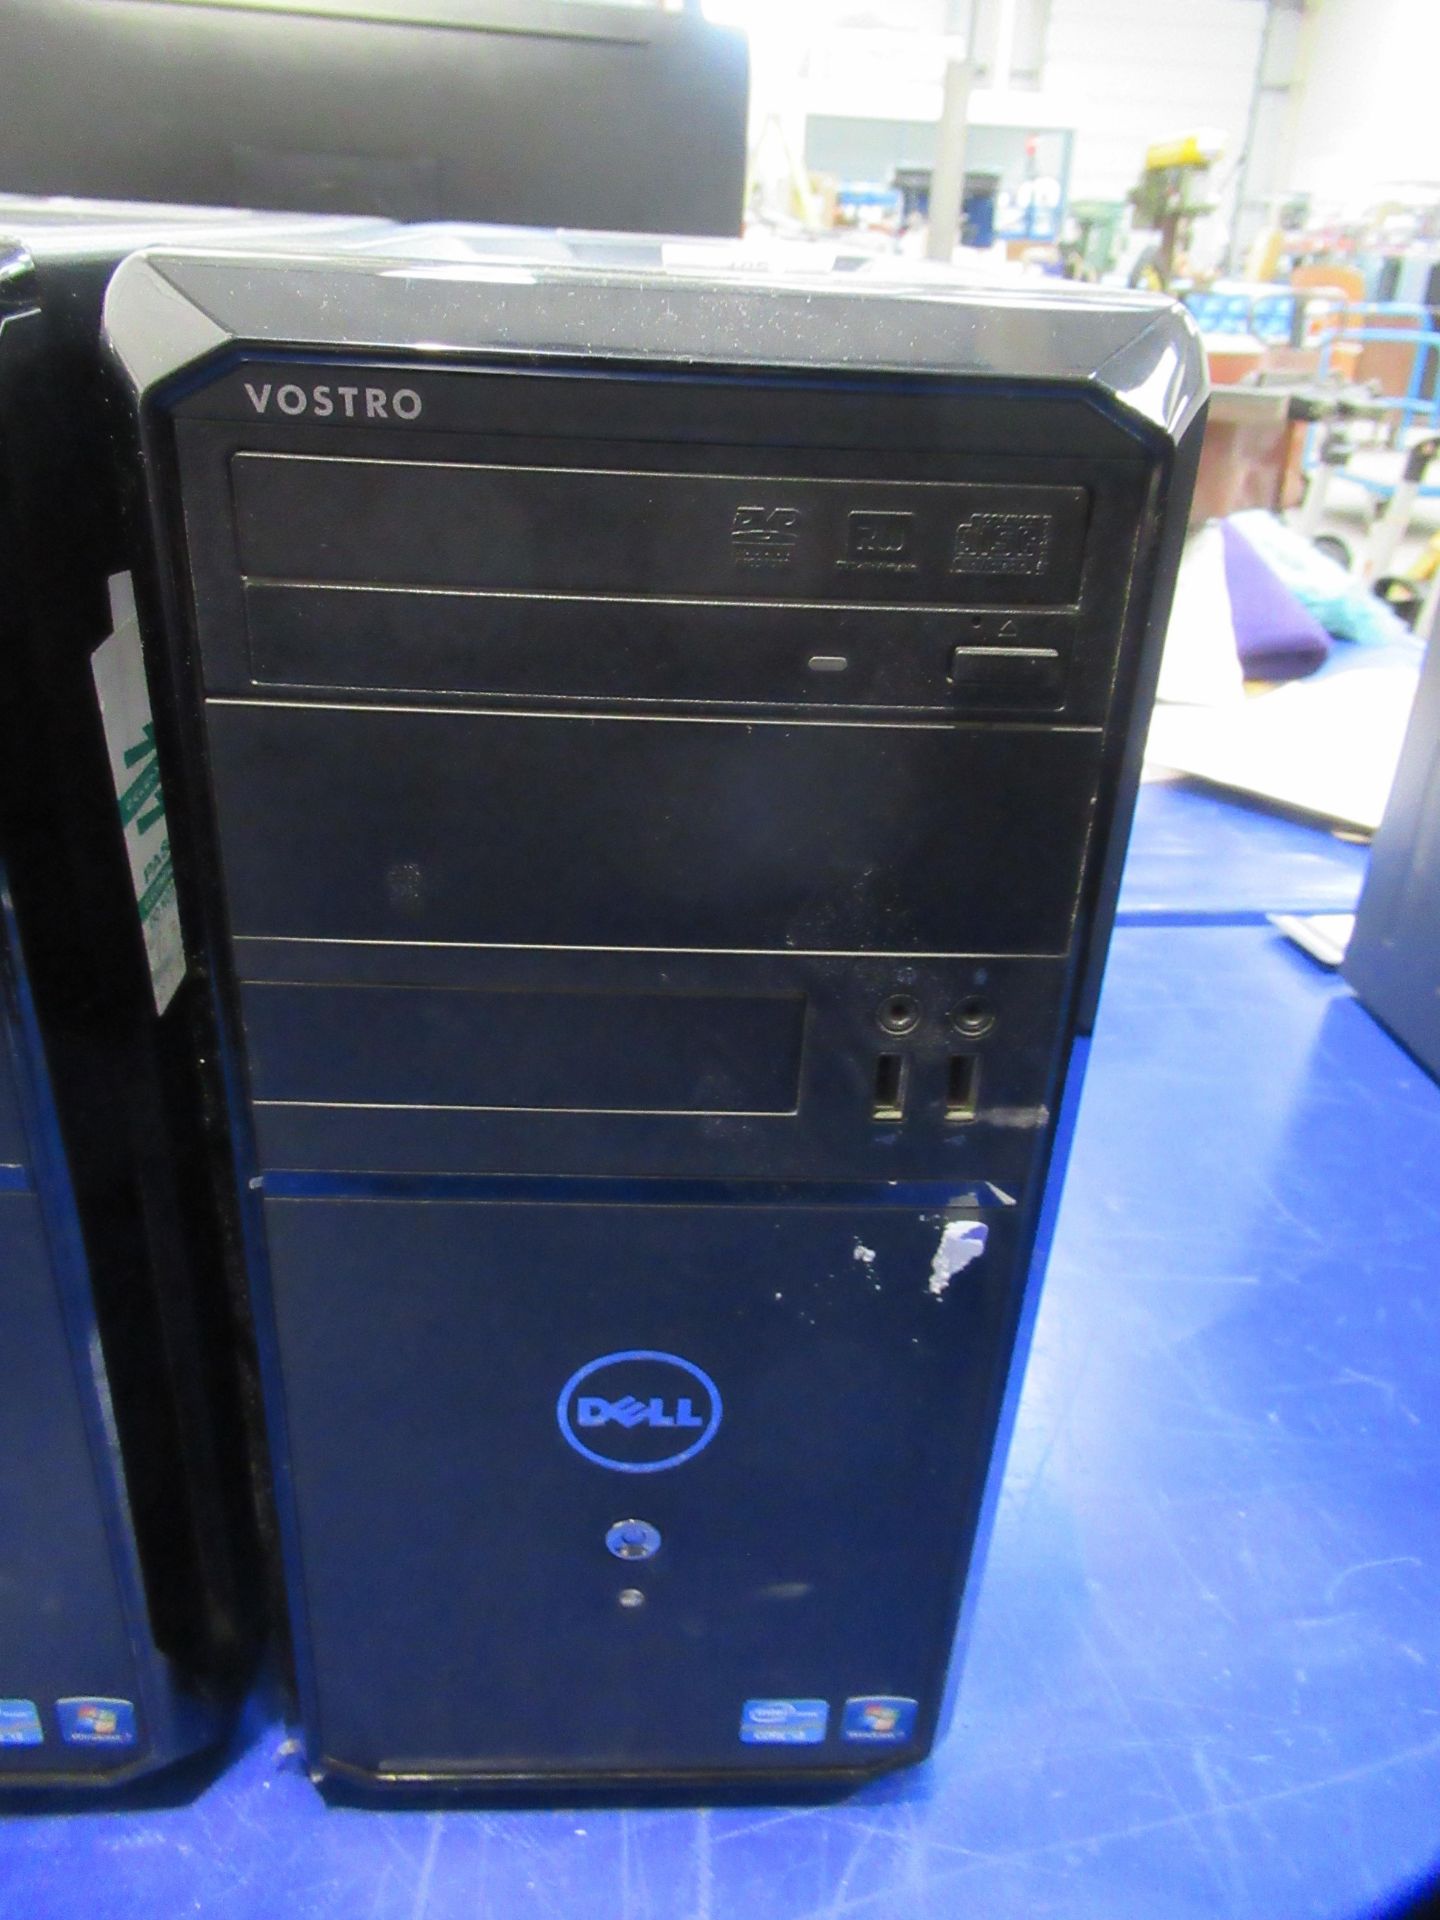 3x Dell Vostro 270 PC's- no power cables - Image 2 of 7